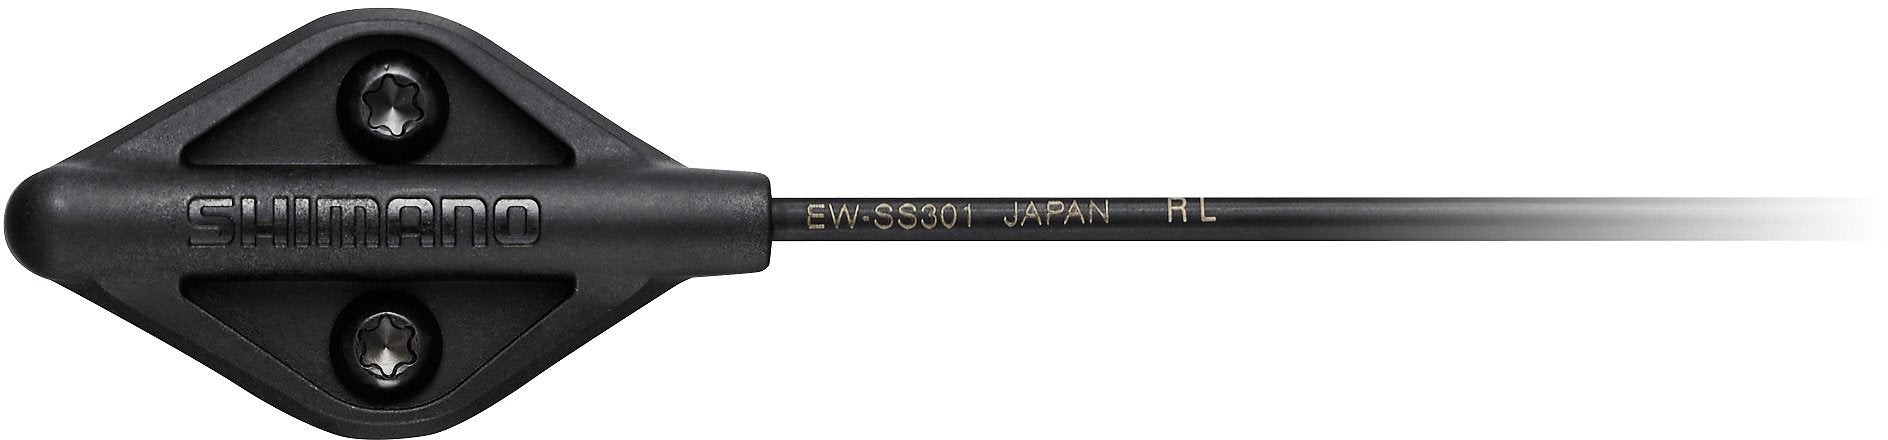 Shimano EW-SS301 Speed Sensor Unit